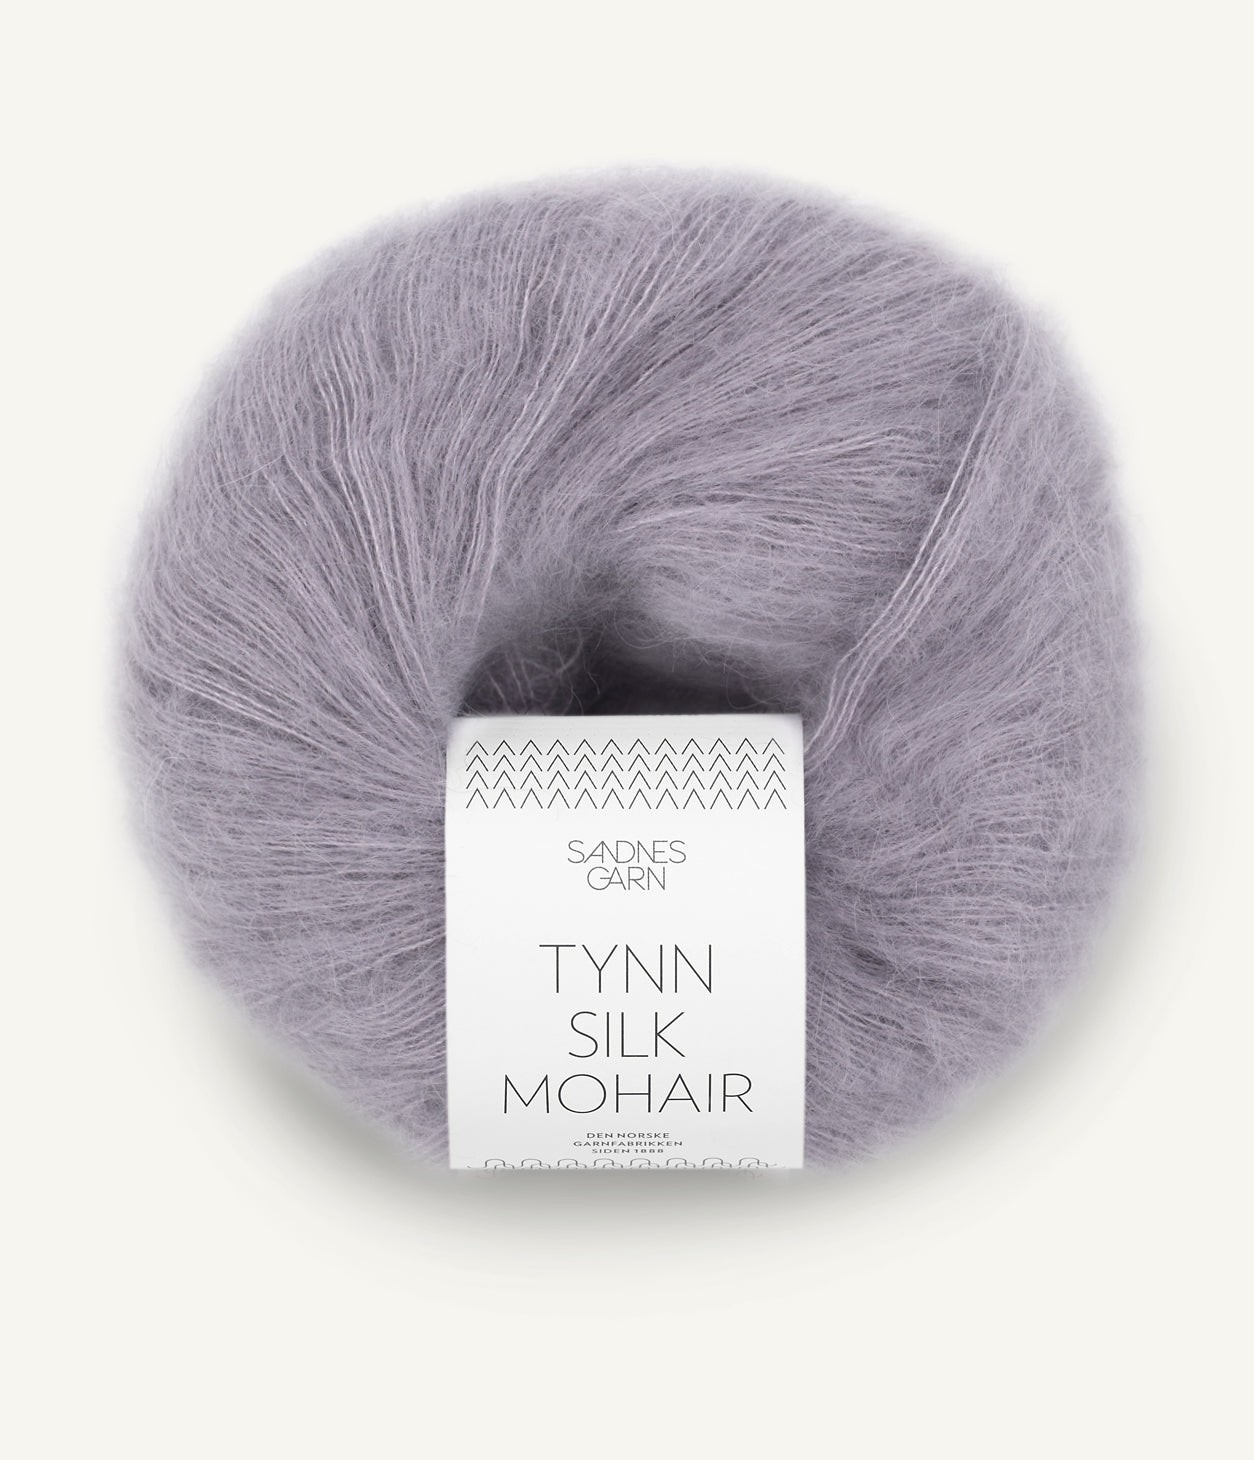 Laine Tynn Silk Mohair - SANDNES GARN